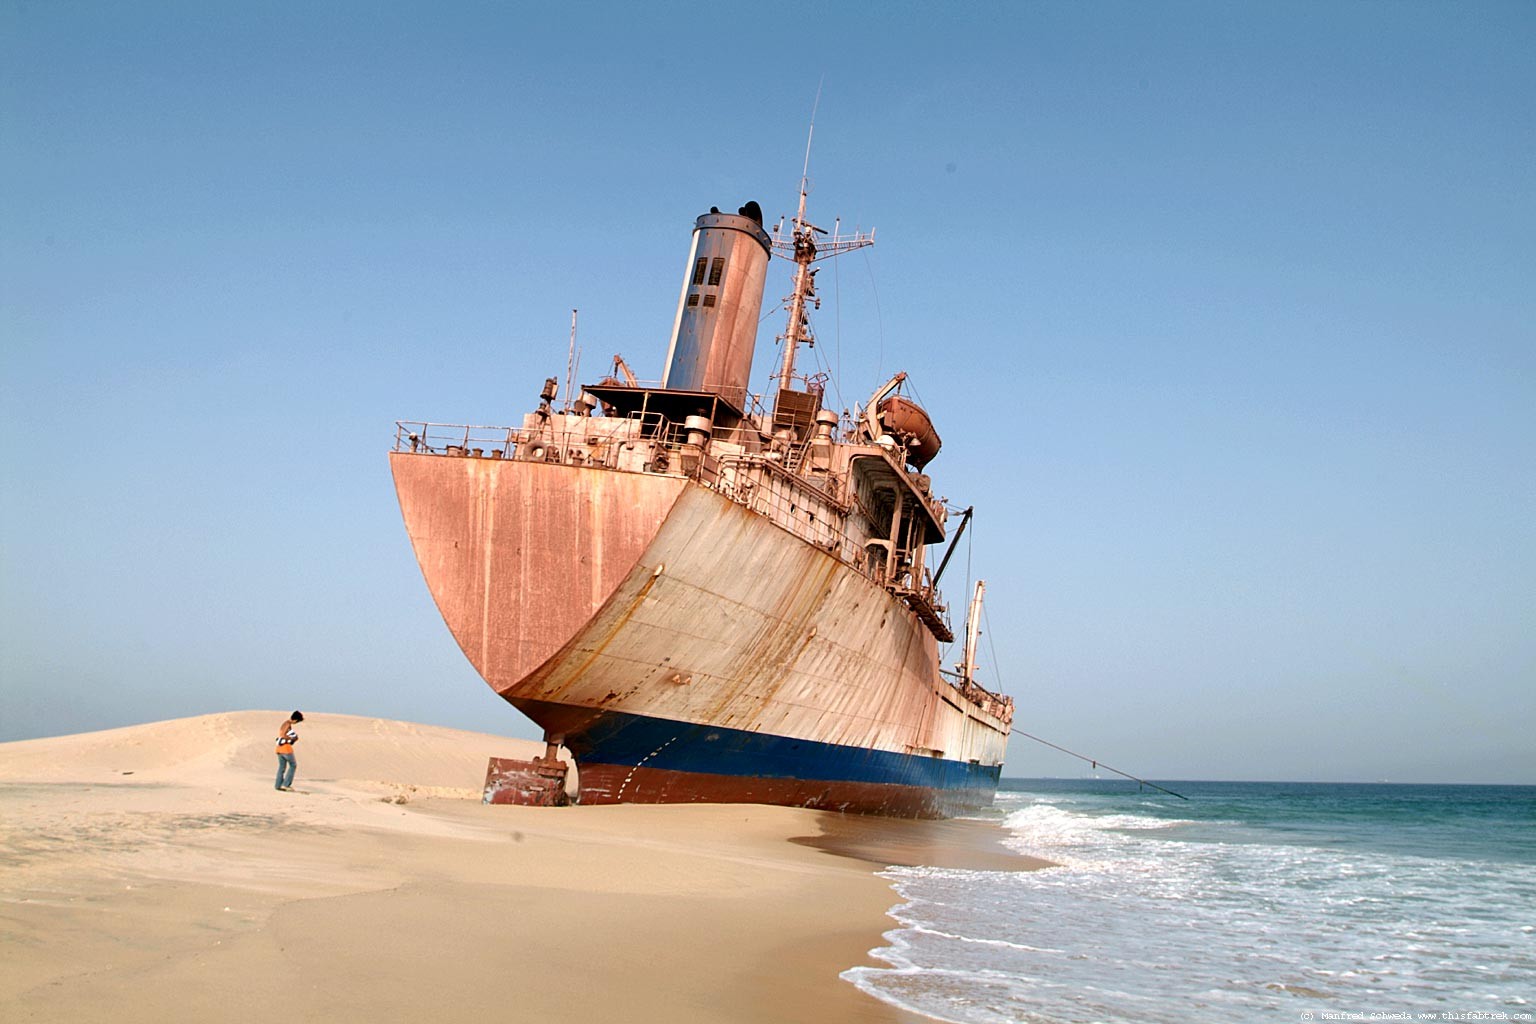 General 1536x1024 Africa ship abandoned wreck shipwreck clear sky sea rust metal